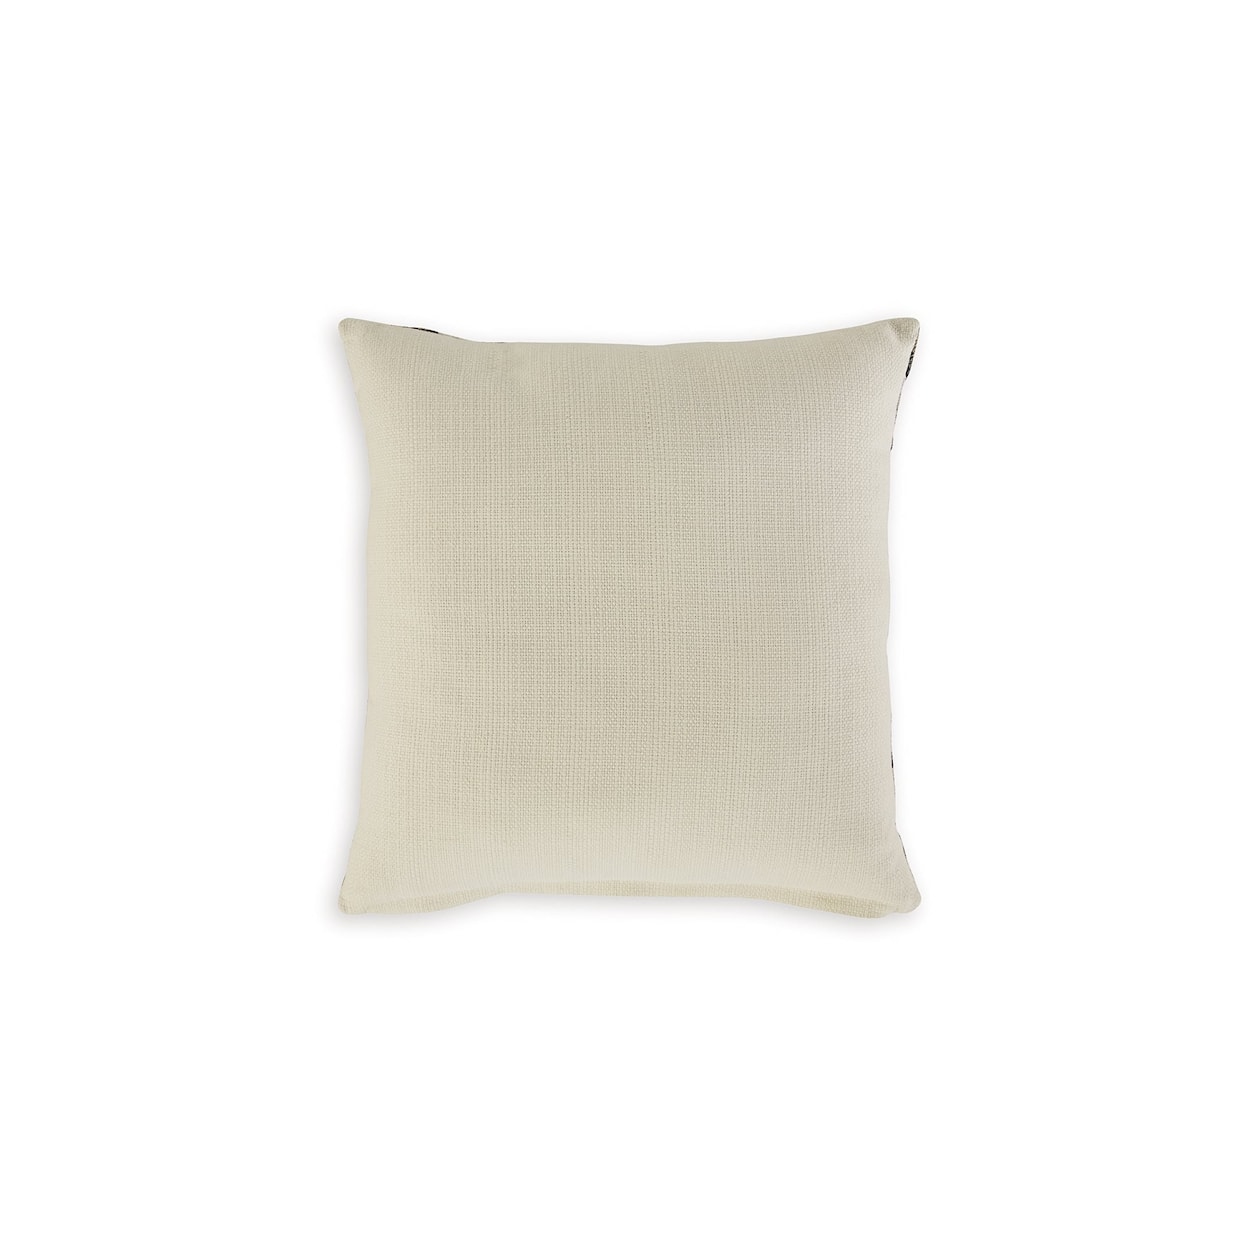 Ashley Furniture Signature Design Holdenway Pillow (Set of 4)